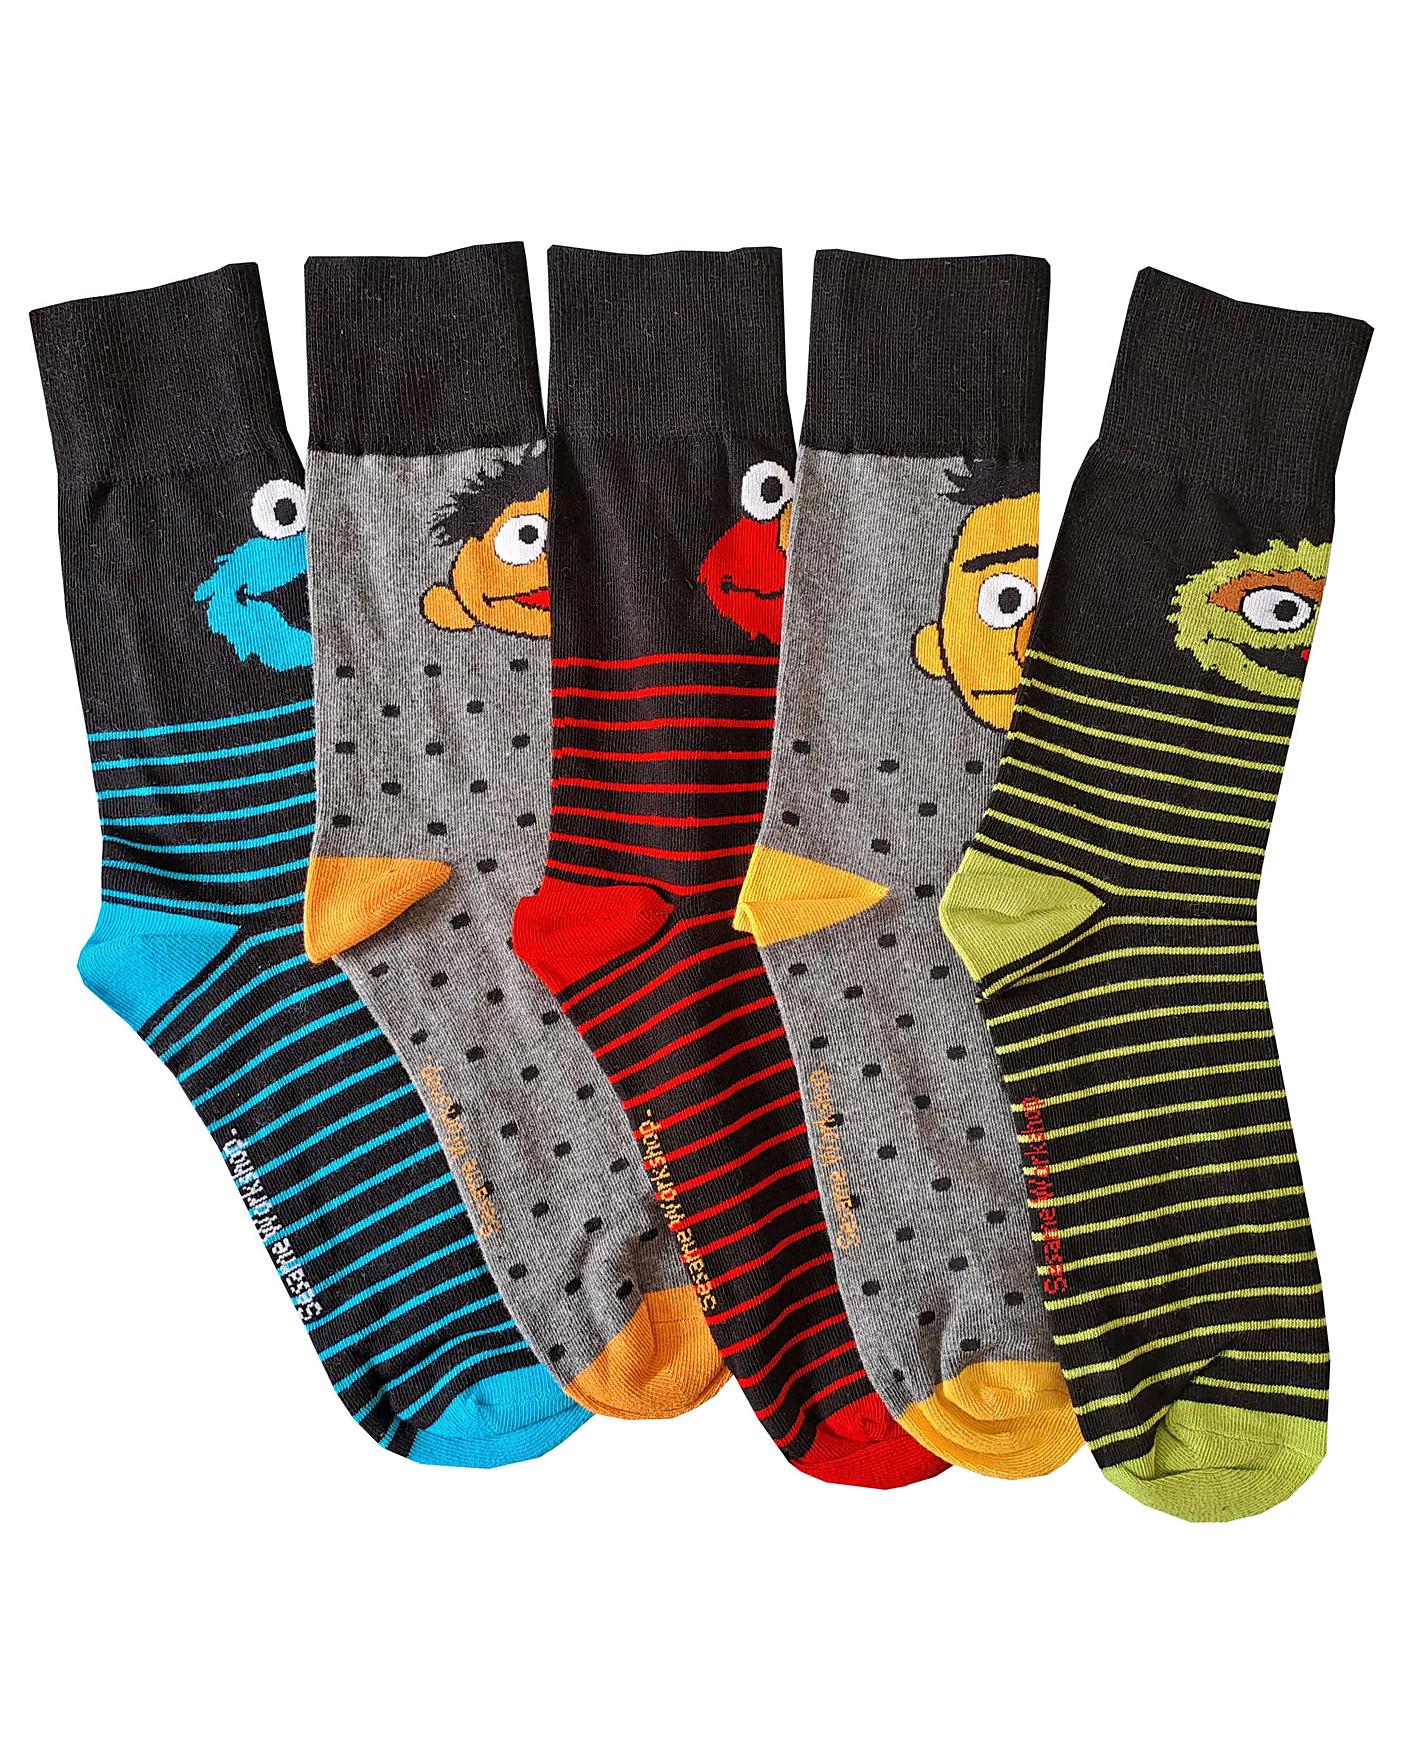 Shop for Sesame Street, Underwear & Socks